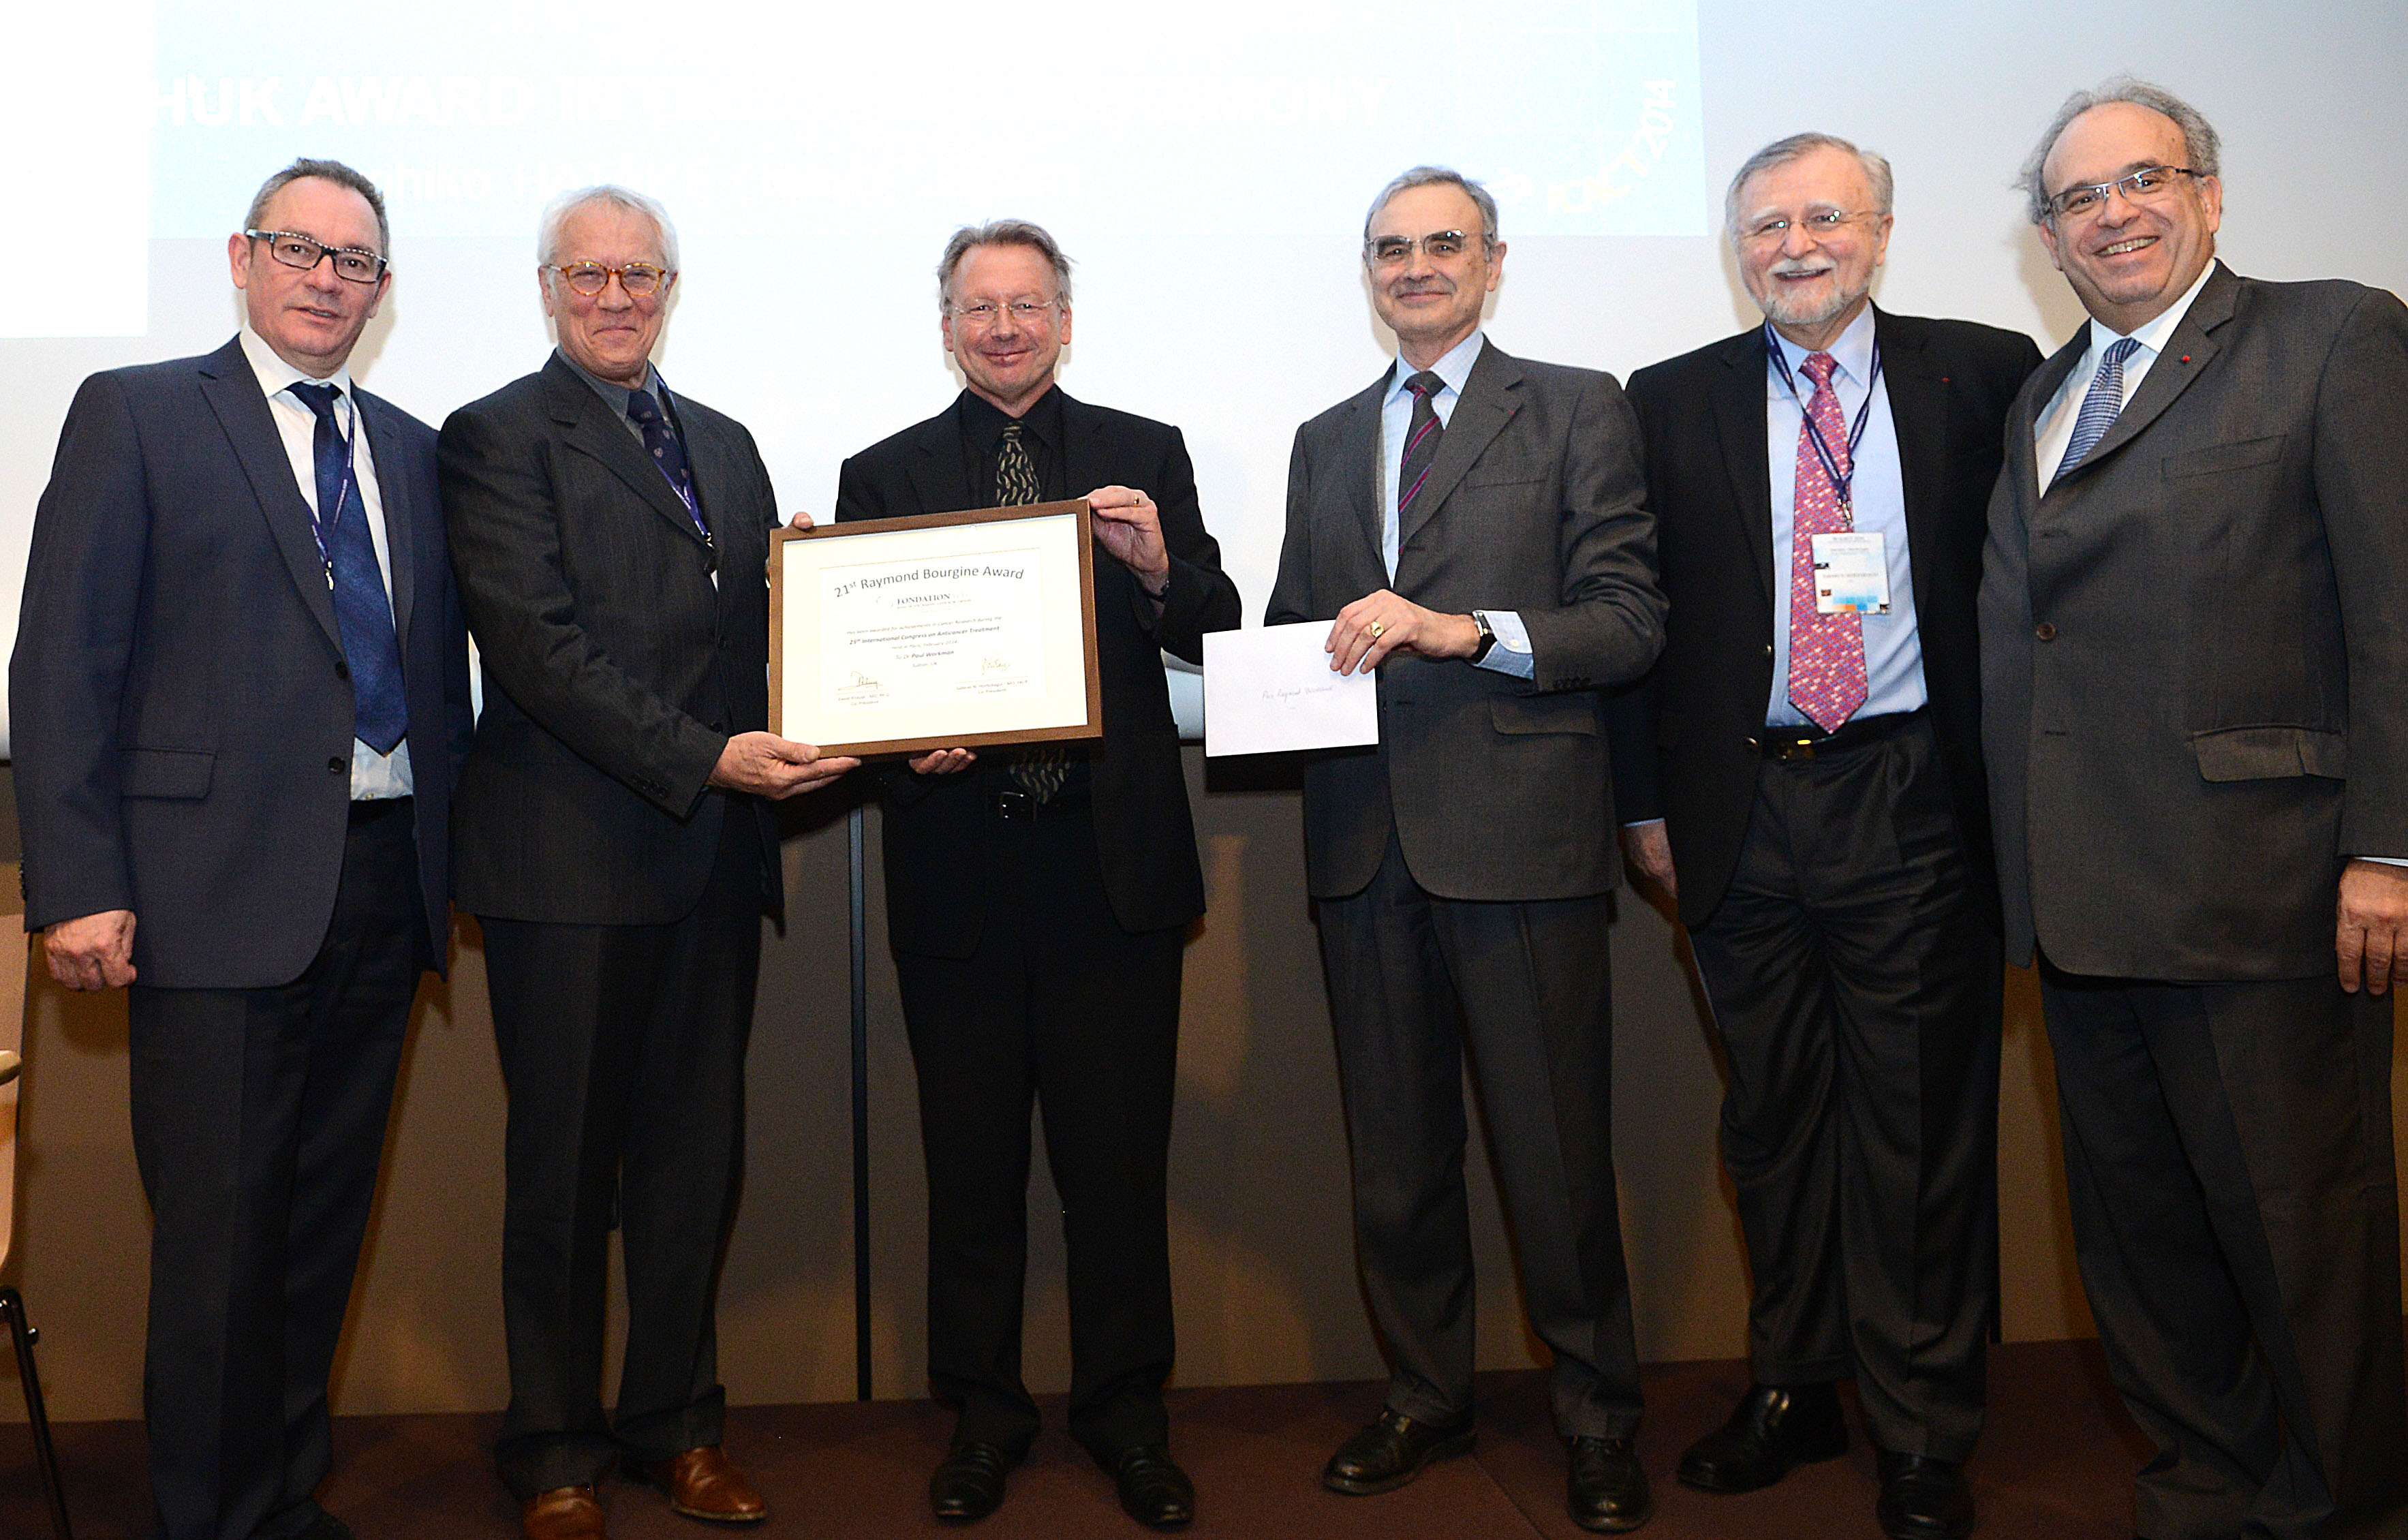 Professor Paul Workman receives the prestigious Raymond Borgine Award for cancer research.